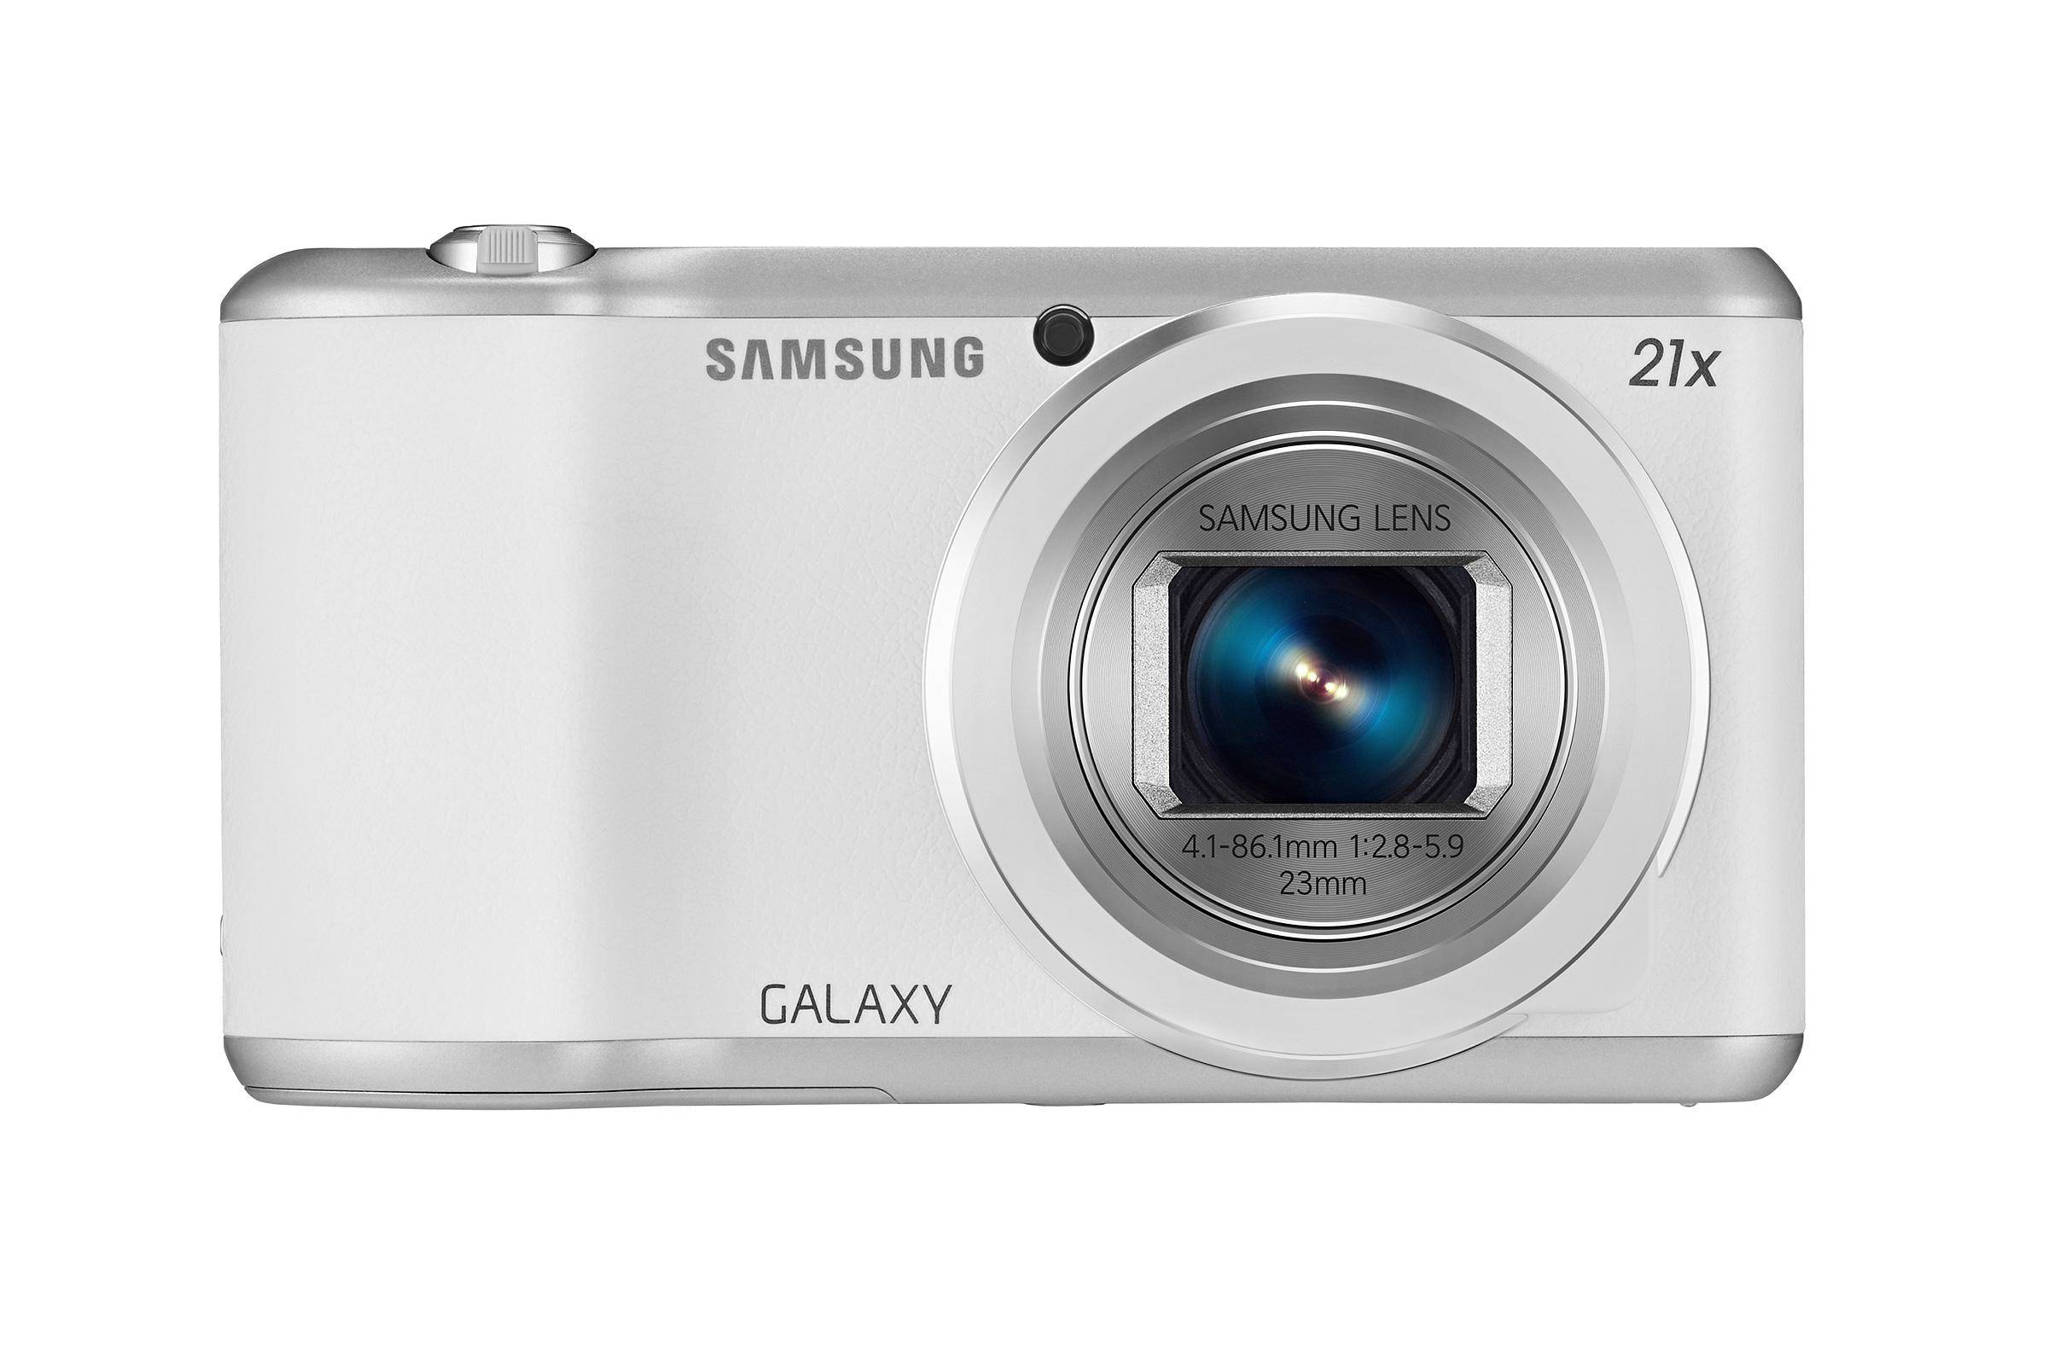 Samsung Galaxy 2 compact camera